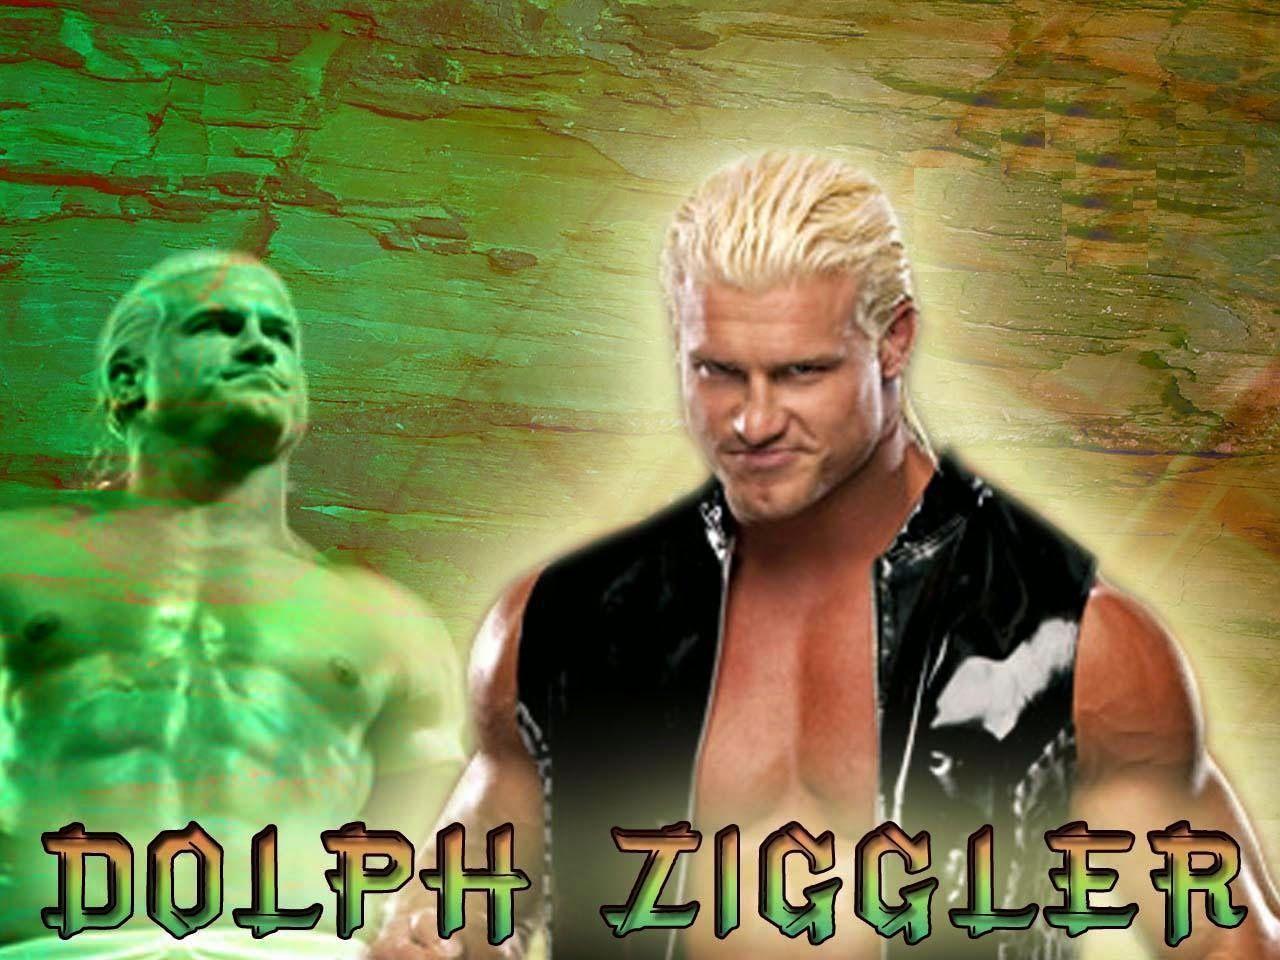 Dolph Ziggler HD Wallpaper Free Download. WWE HD WALLPAPER FREE